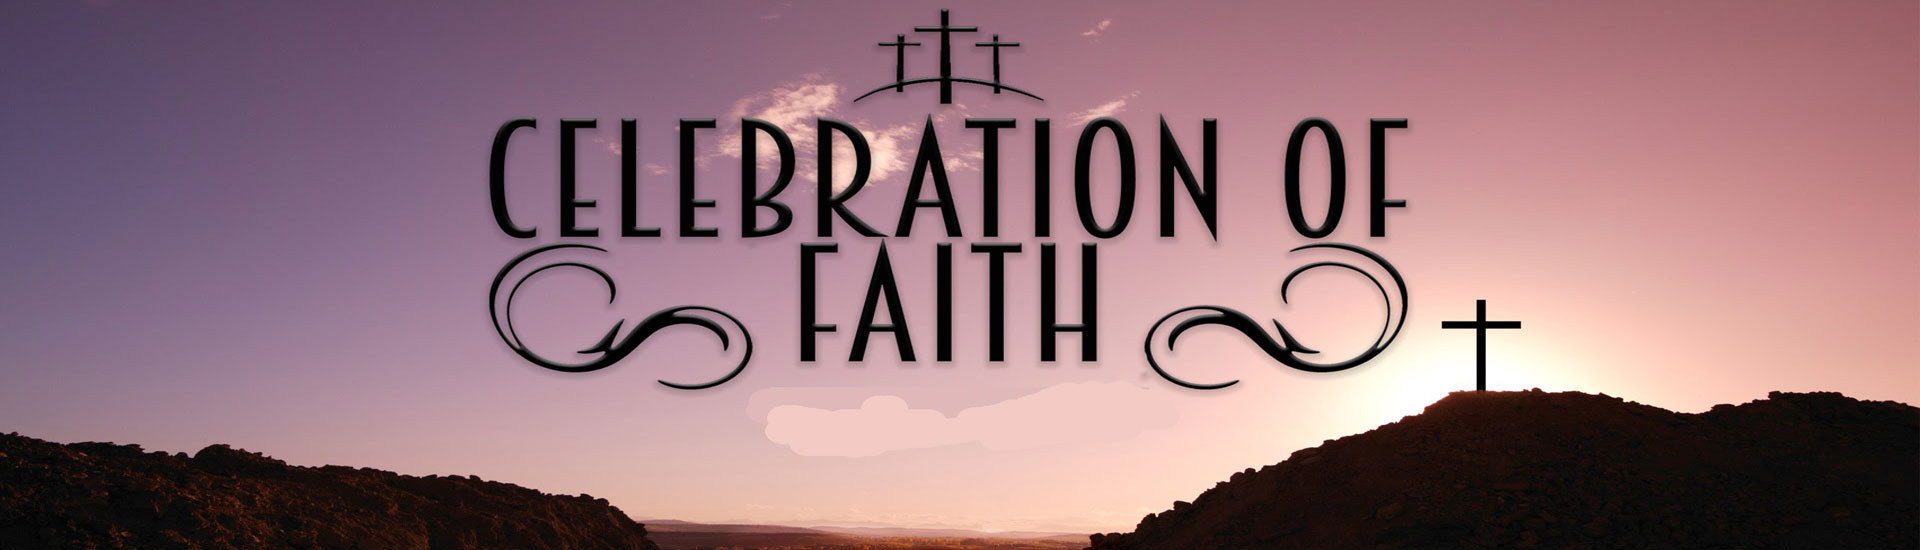 Celebration of faith